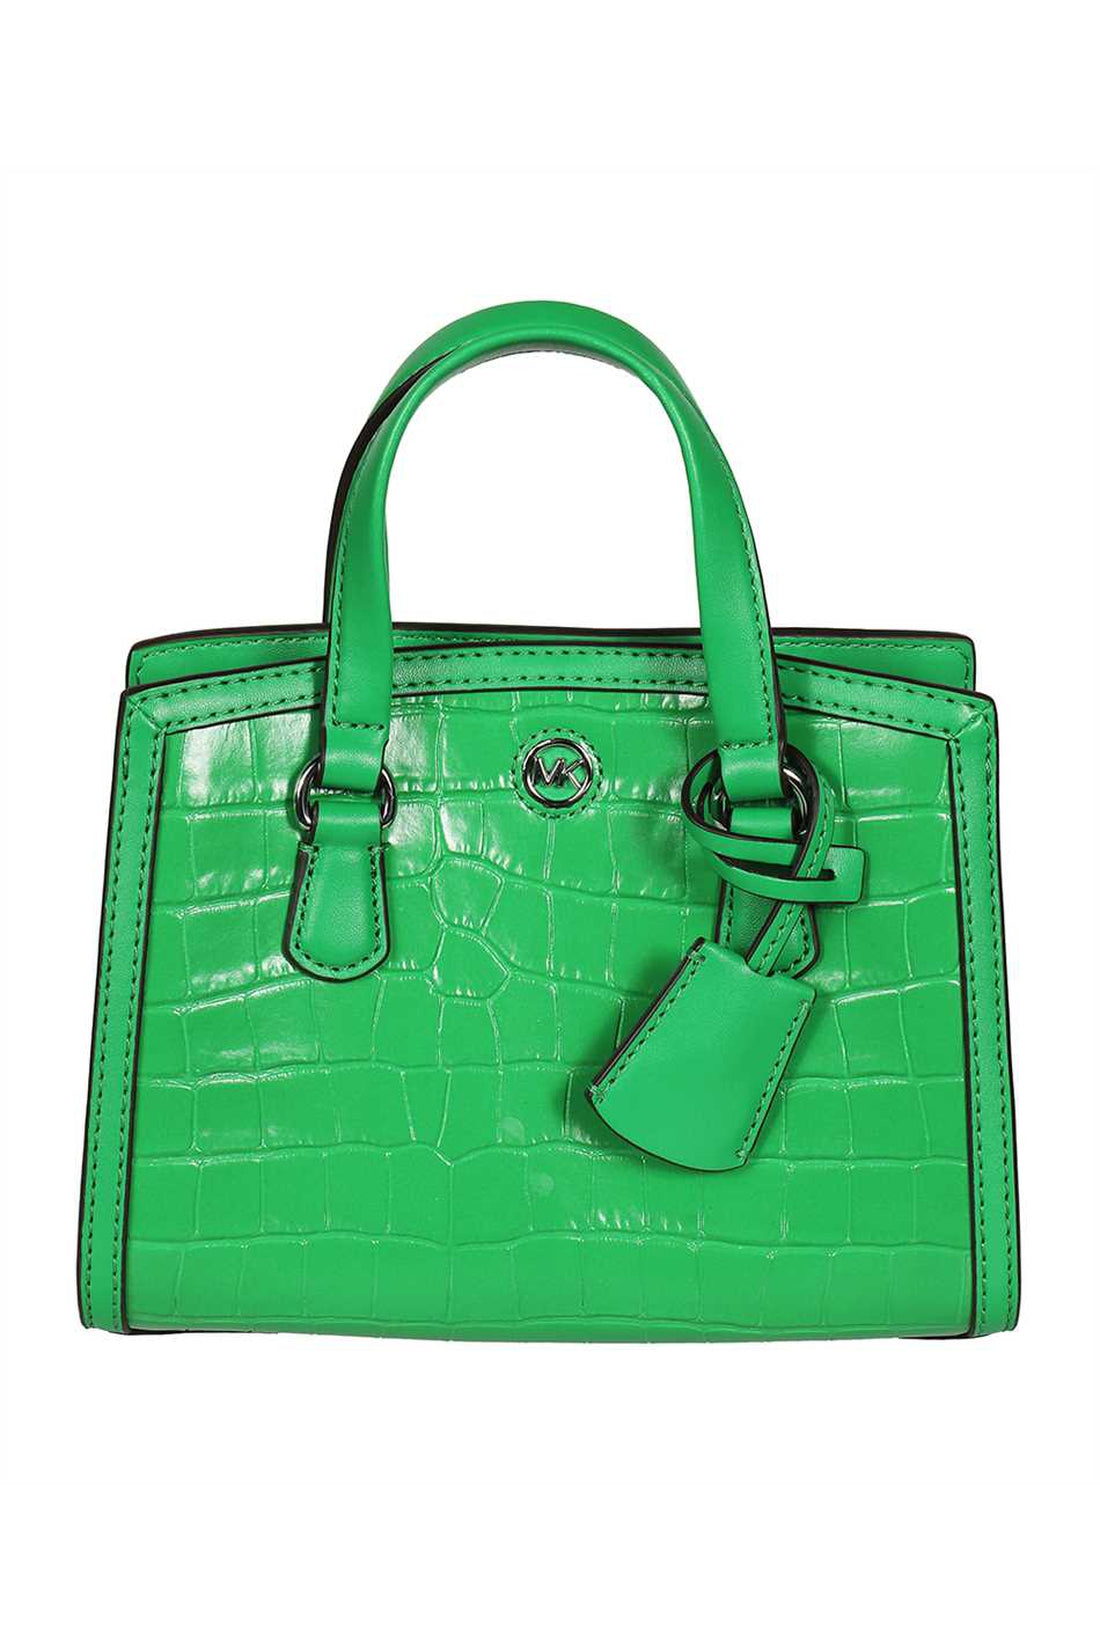 MICHAEL MICHAEL KORS-OUTLET-SALE-Chantal printed leather handbag-ARCHIVIST